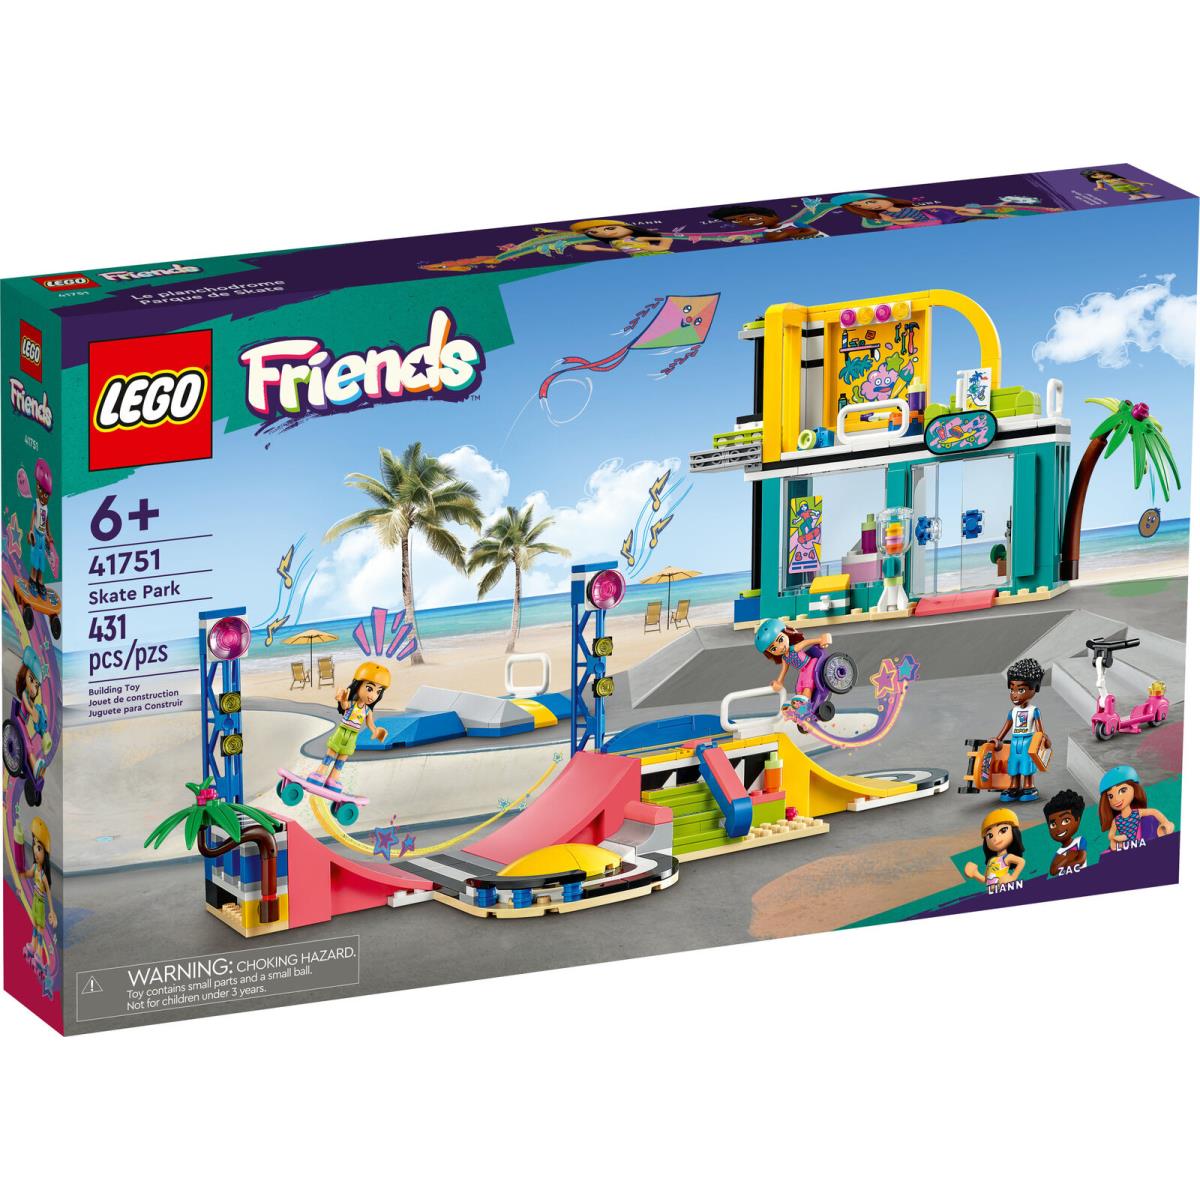 Lego Friends Skate Park Set 41751 Building Toy Set Gift